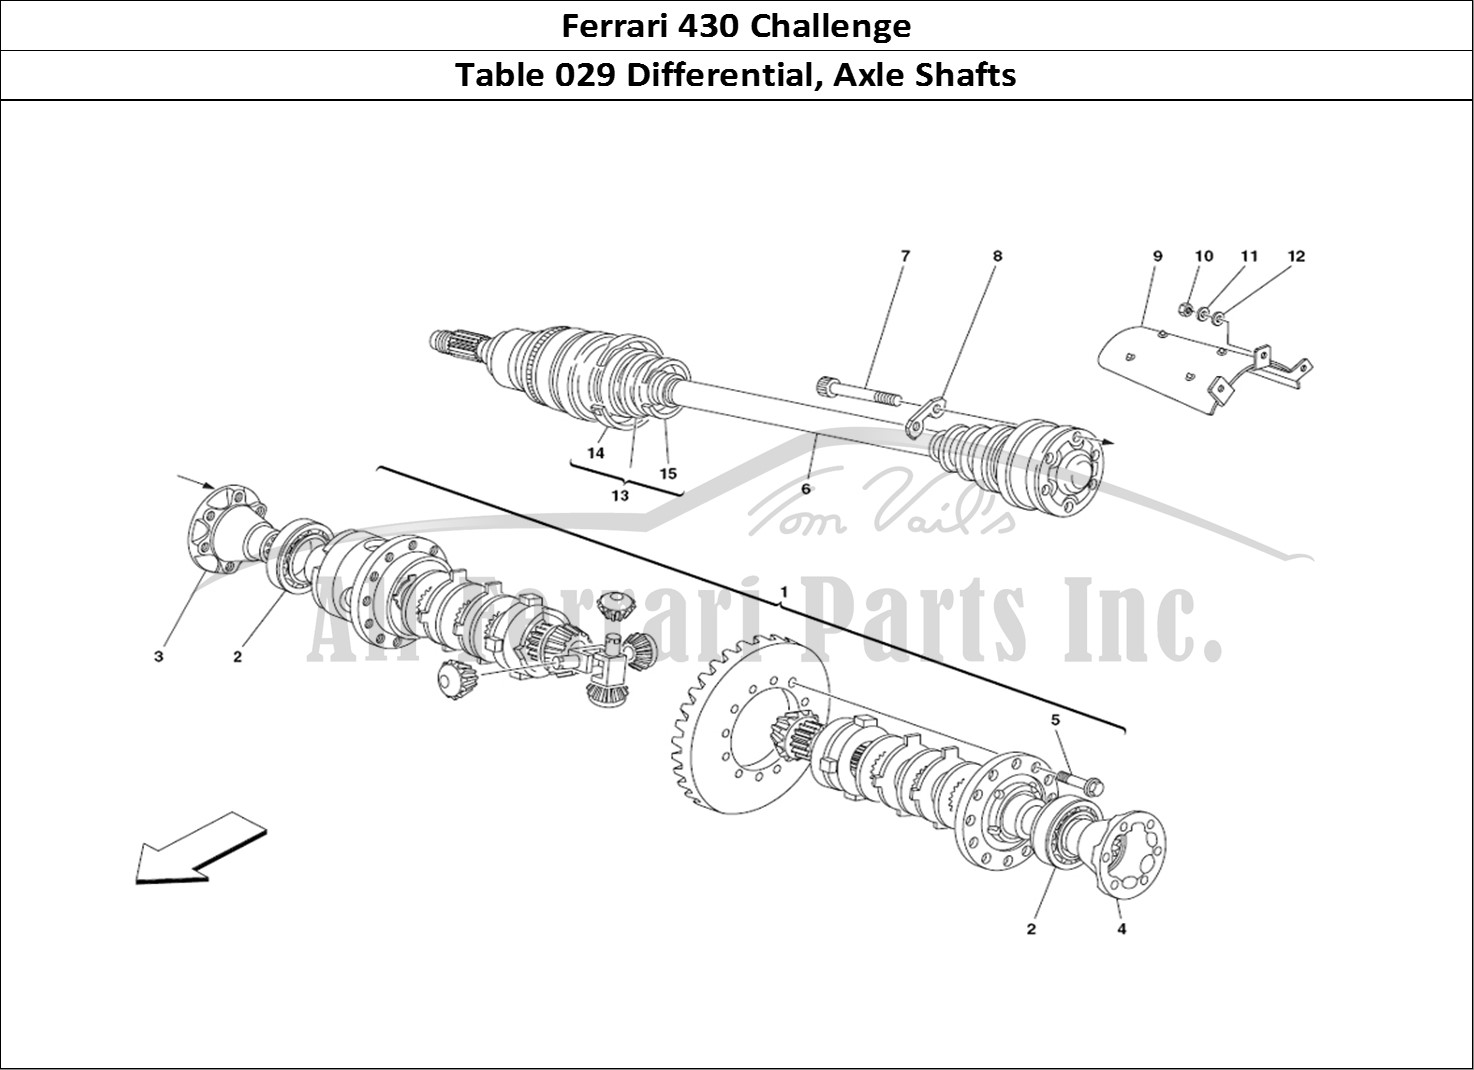 Ferrari Parts Ferrari 430 Challenge (2006) Page 029 Differential & Axle Shaft